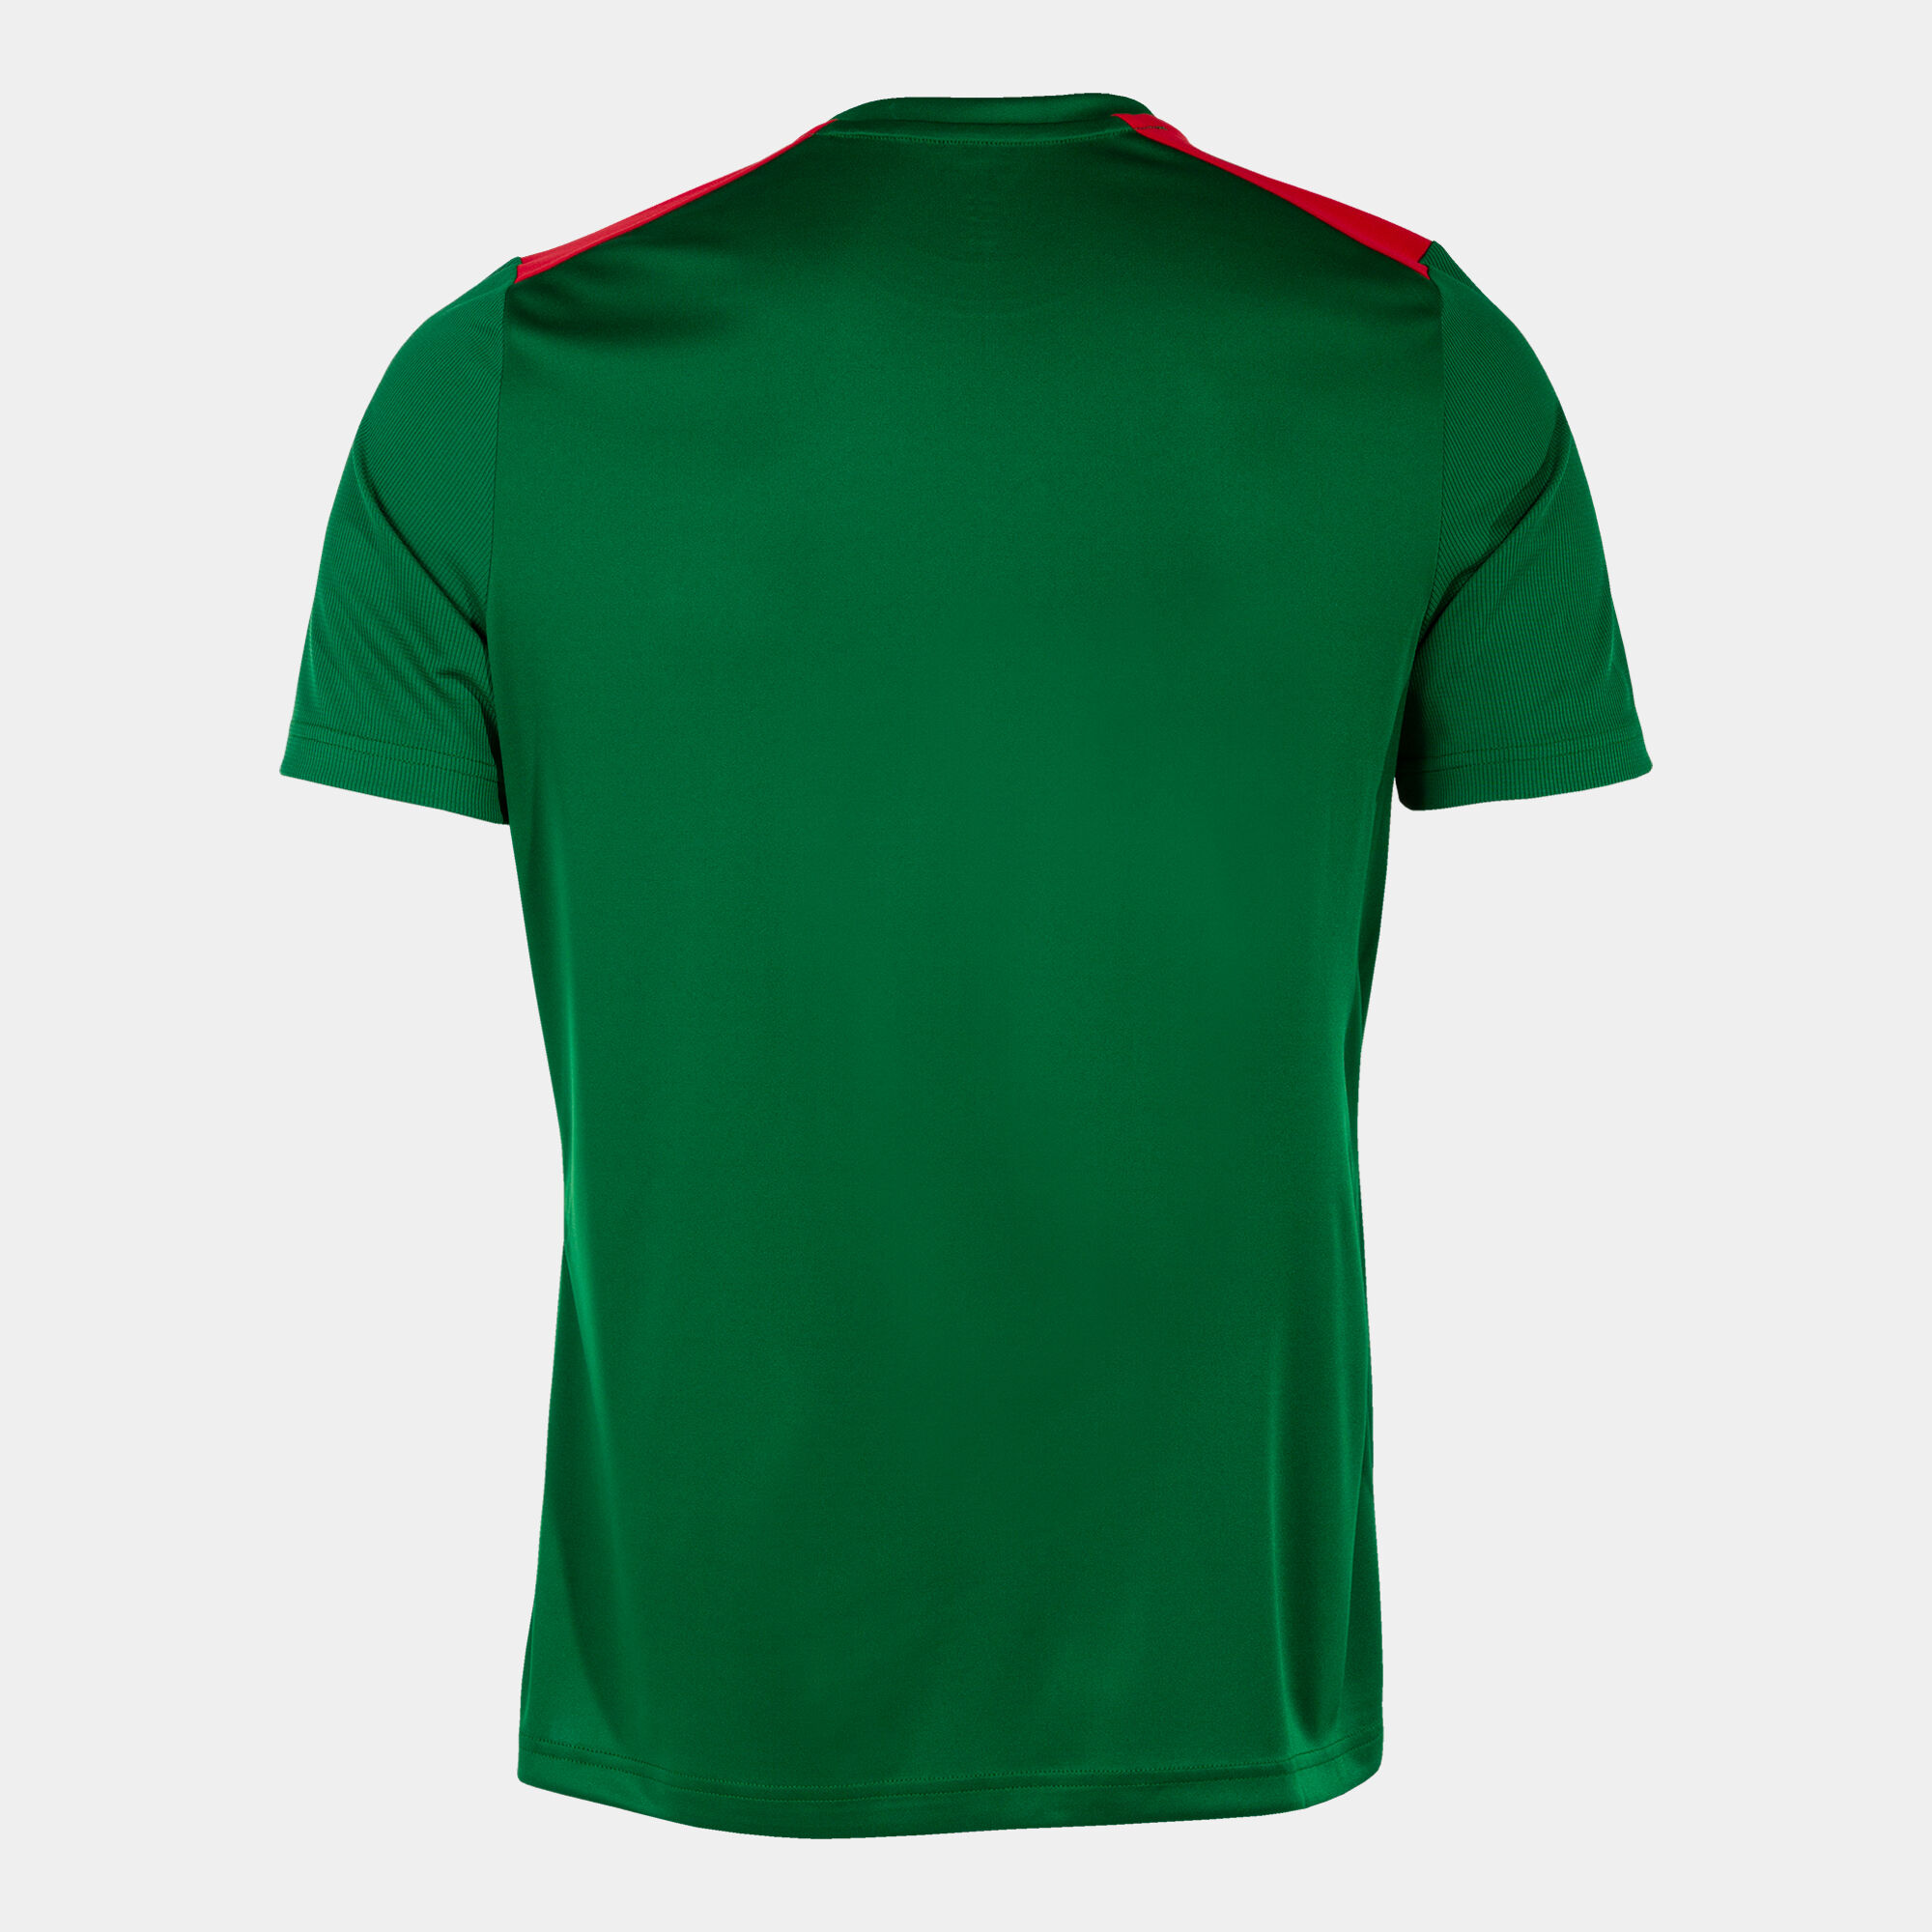 Camiseta manga corta hombre Championship VII verde rojo